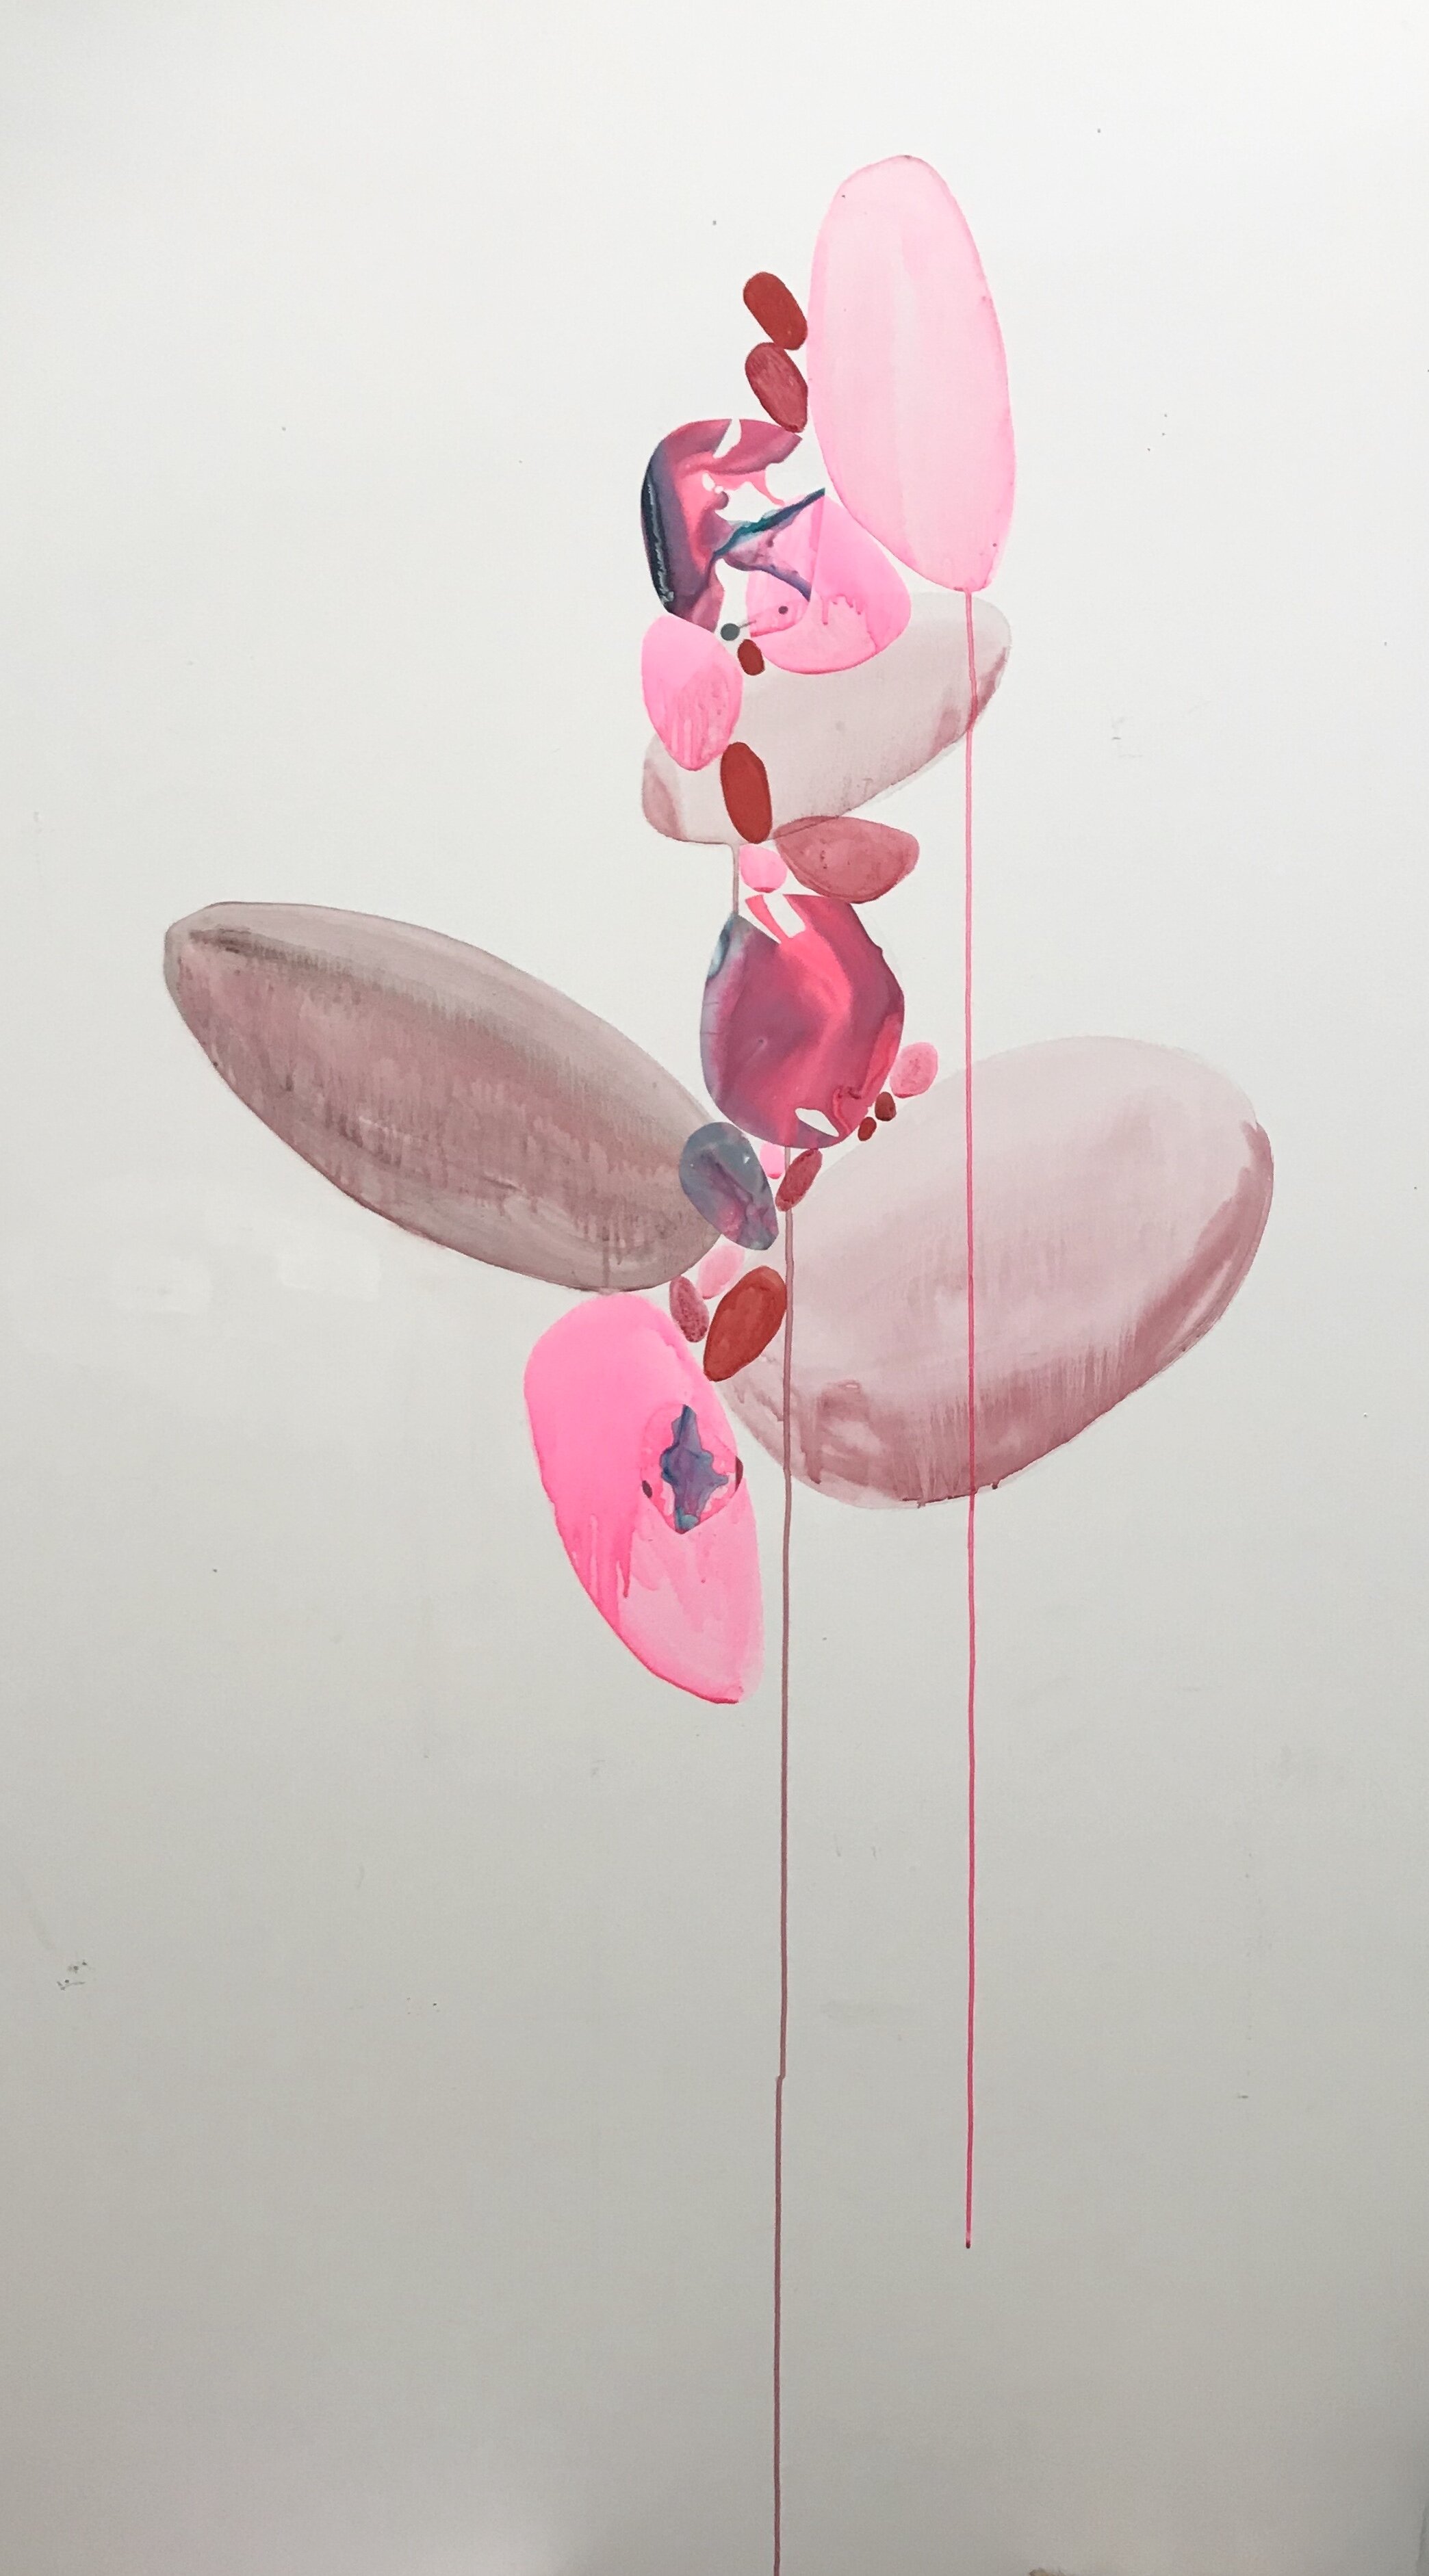    Pink Wall Drawing  , 2019, mixed media installation, 5 x 2 ft. 